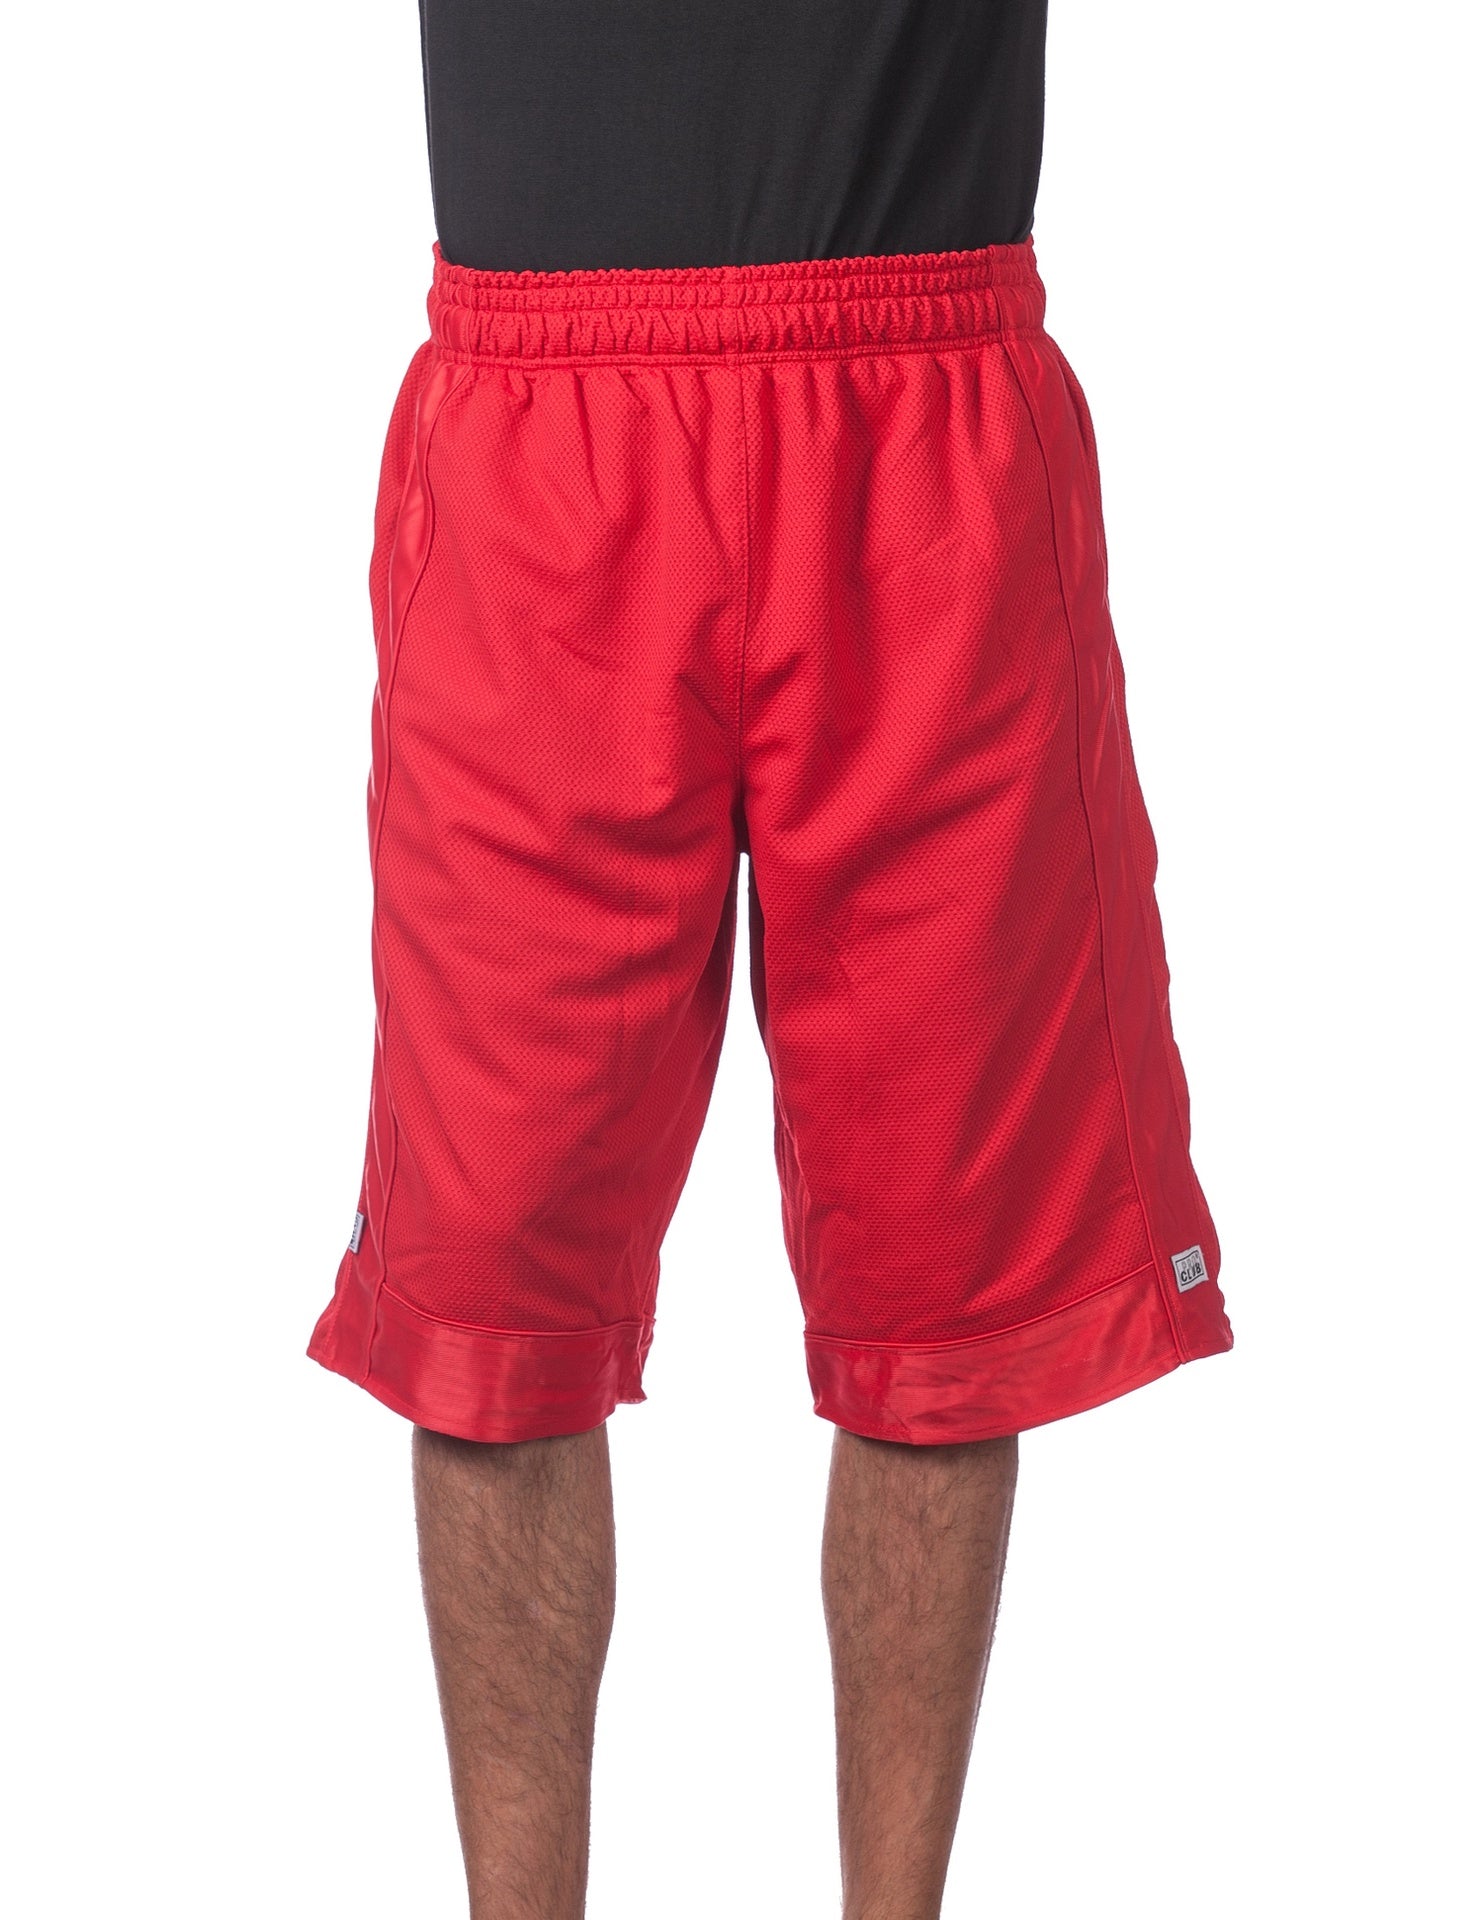 Pro Club Heavyweight Mesh Basketball Shorts - RED